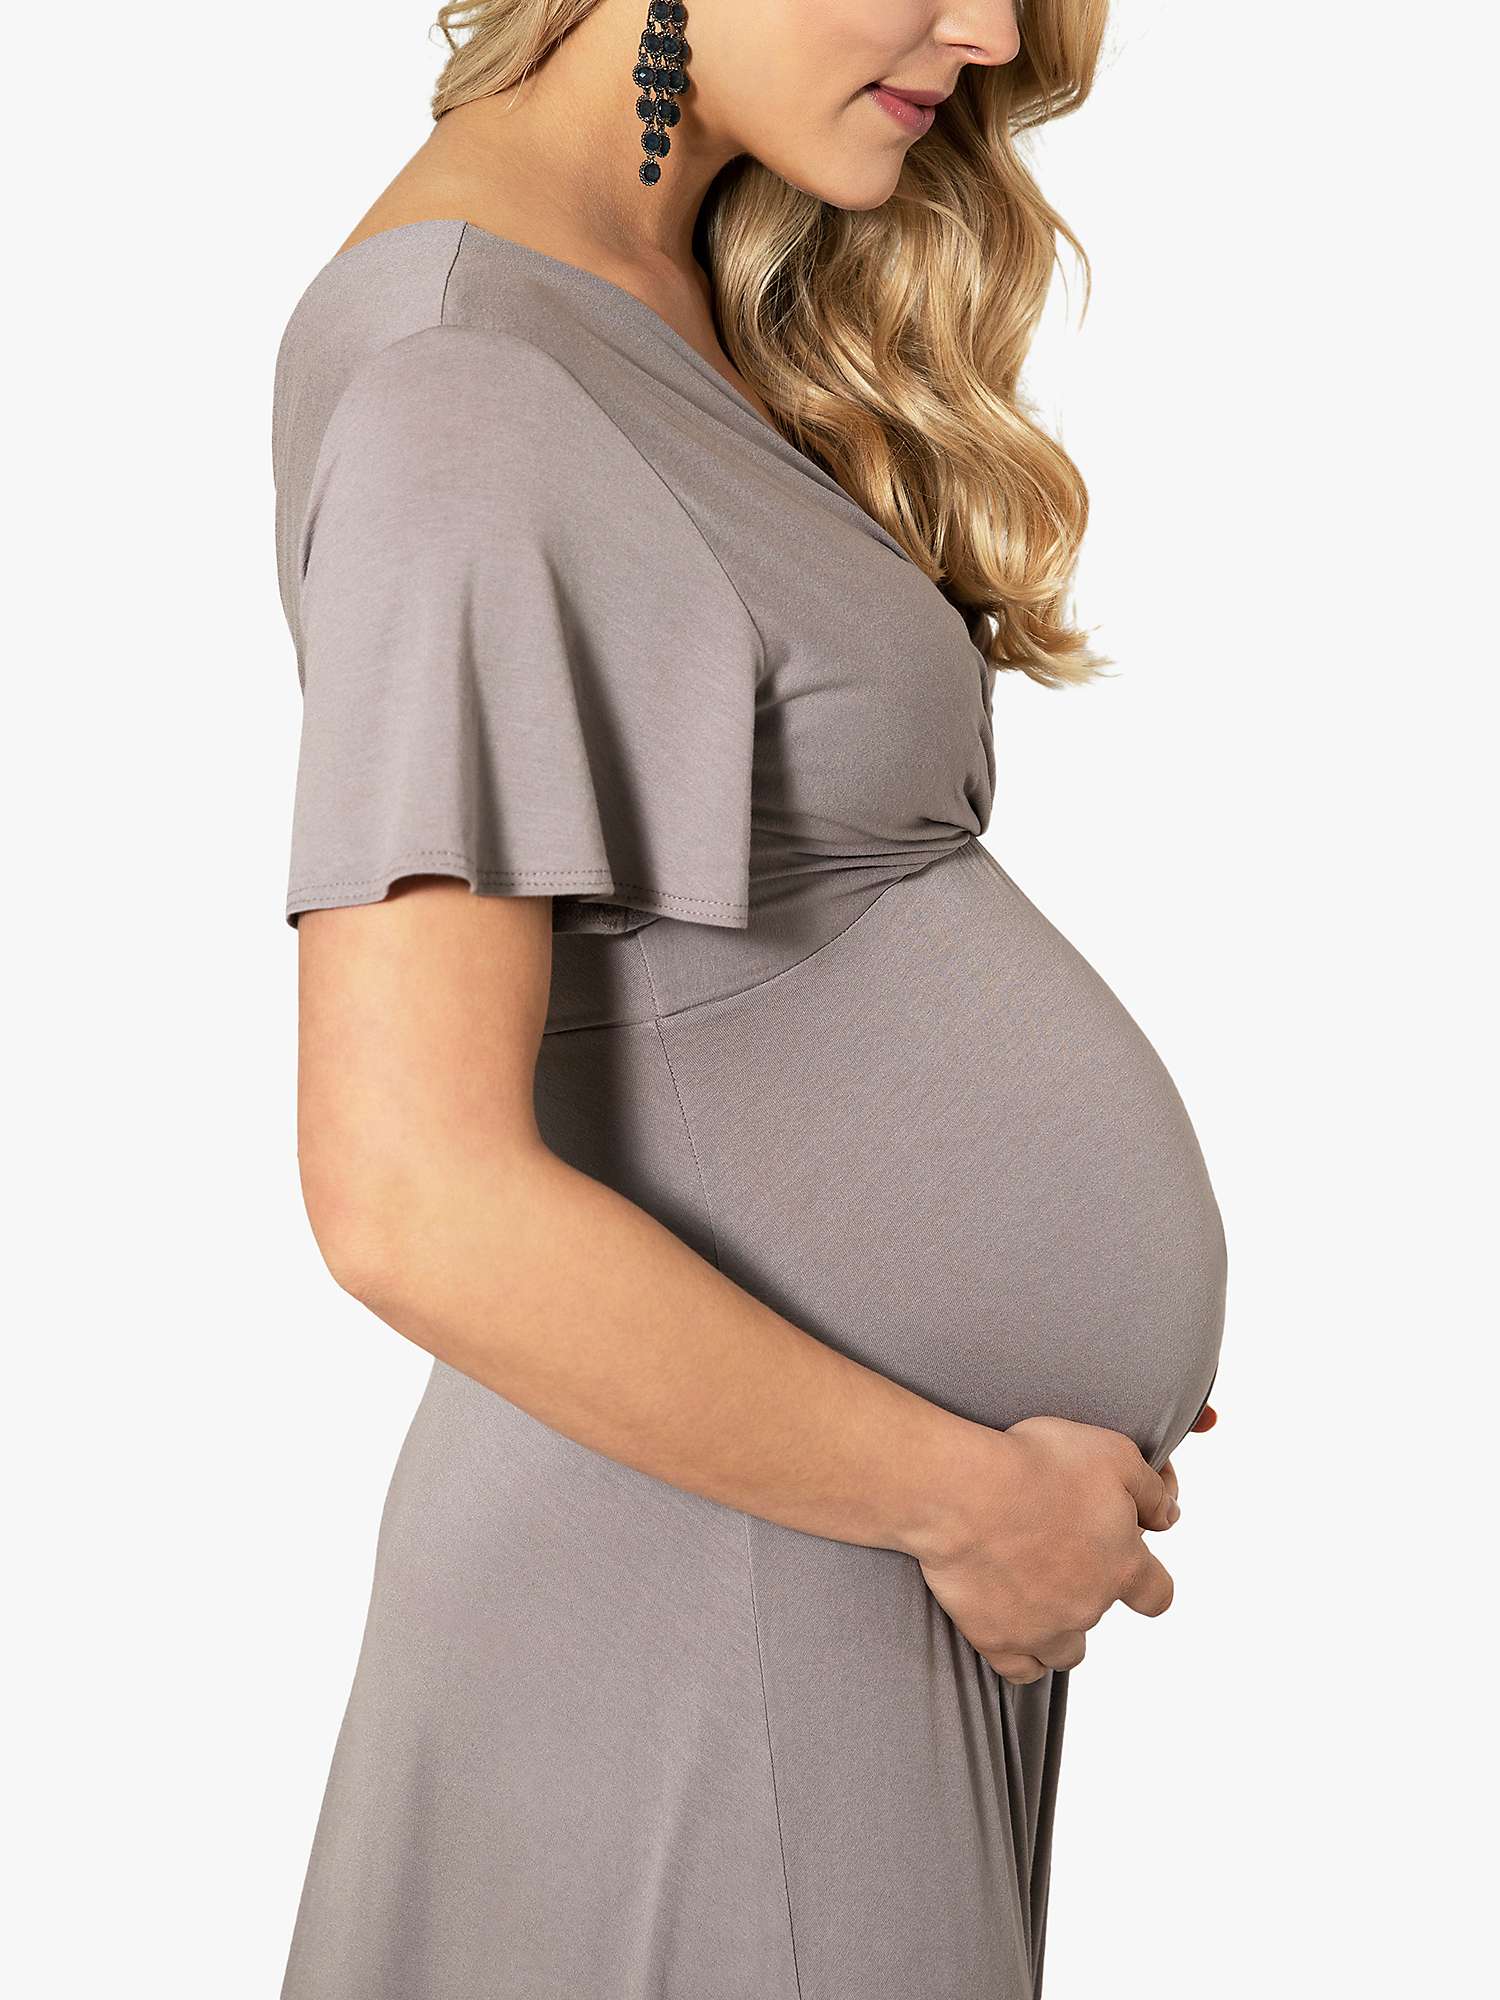 Buy Tiffany Rose Plain Waterfall Midi Maternity Dress Online at johnlewis.com